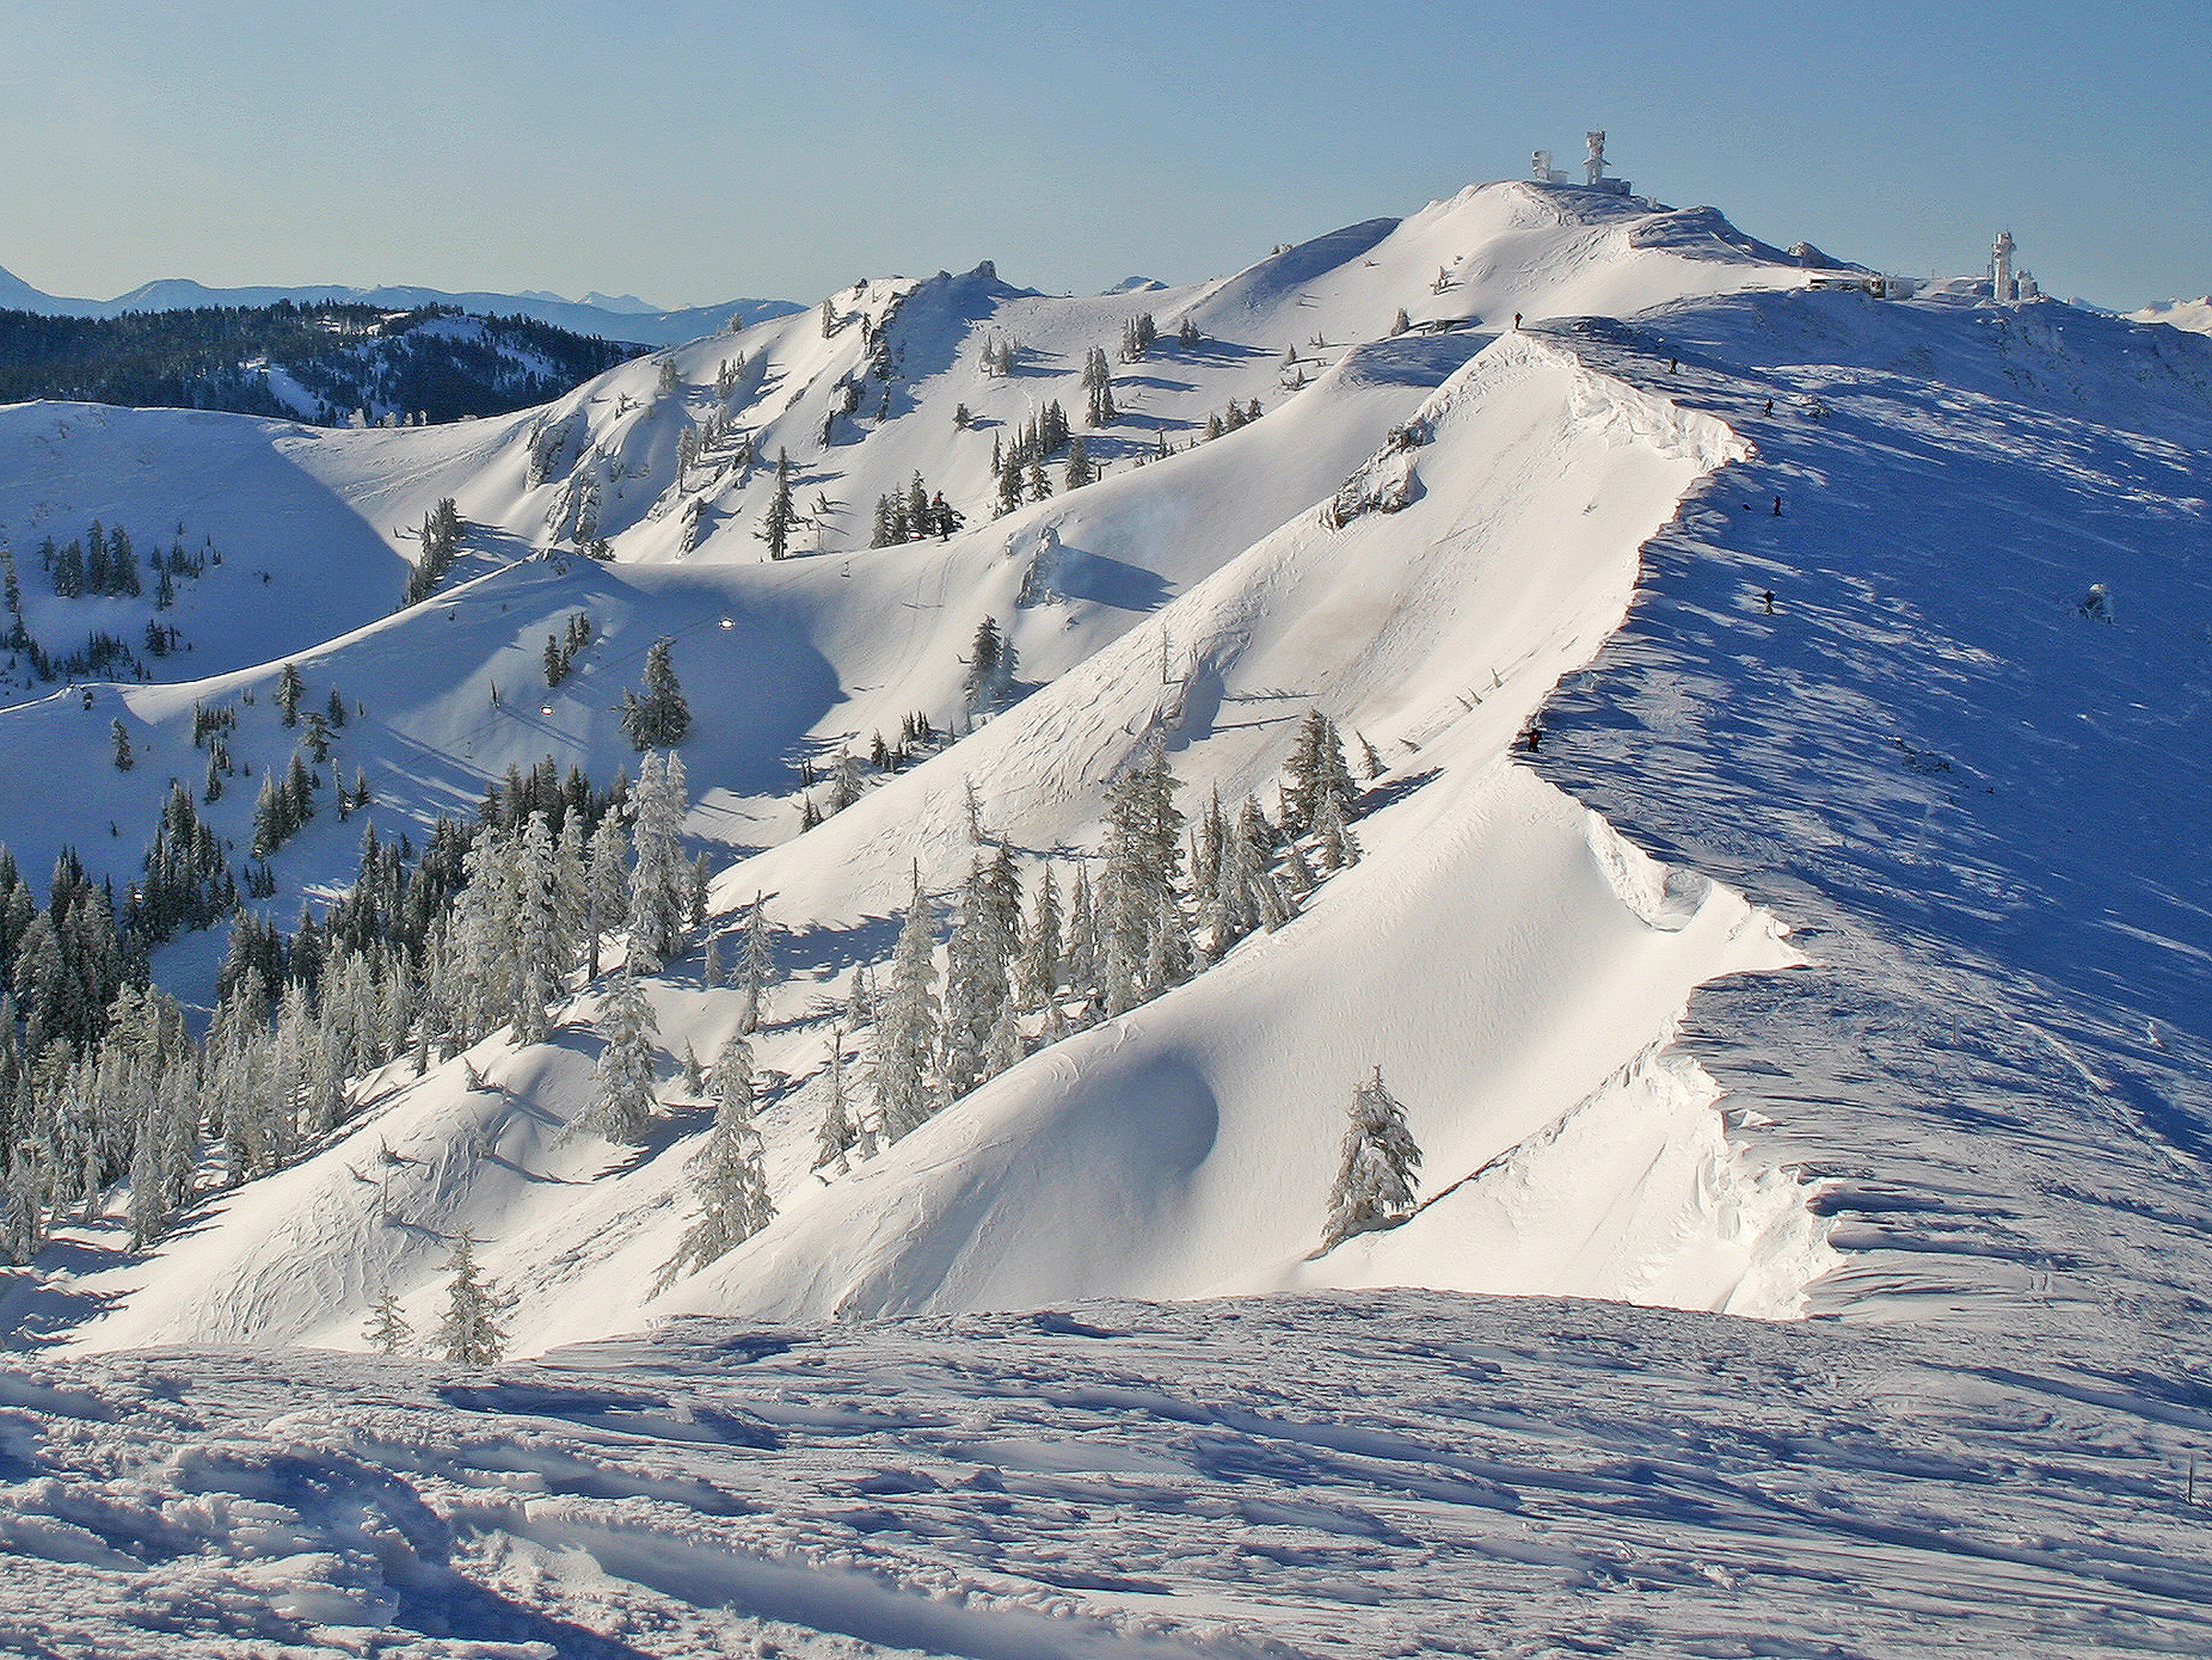 Alpine Meadows OPENS Friday Top to Bottom! - SnowBrains